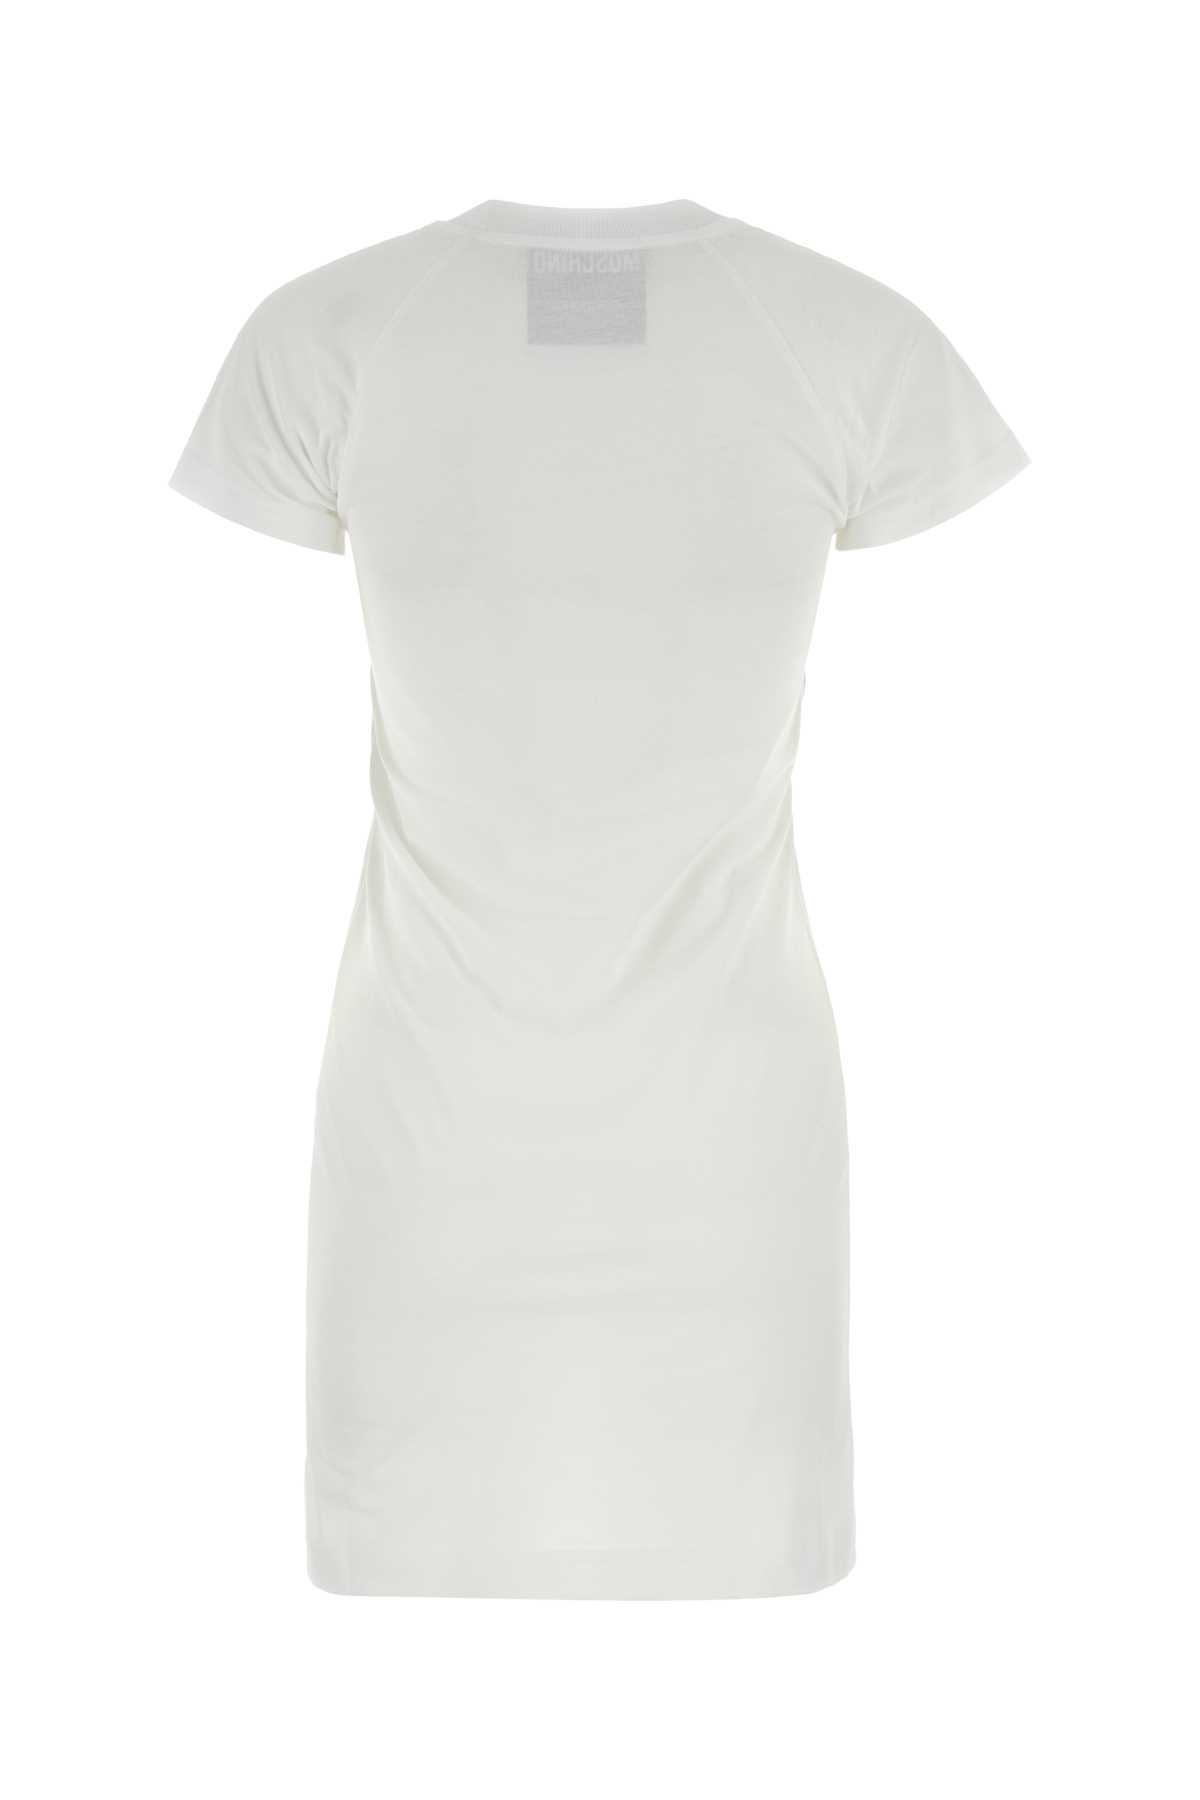 Moschino White Cotton T-shirt Dress In Fantasiabianco